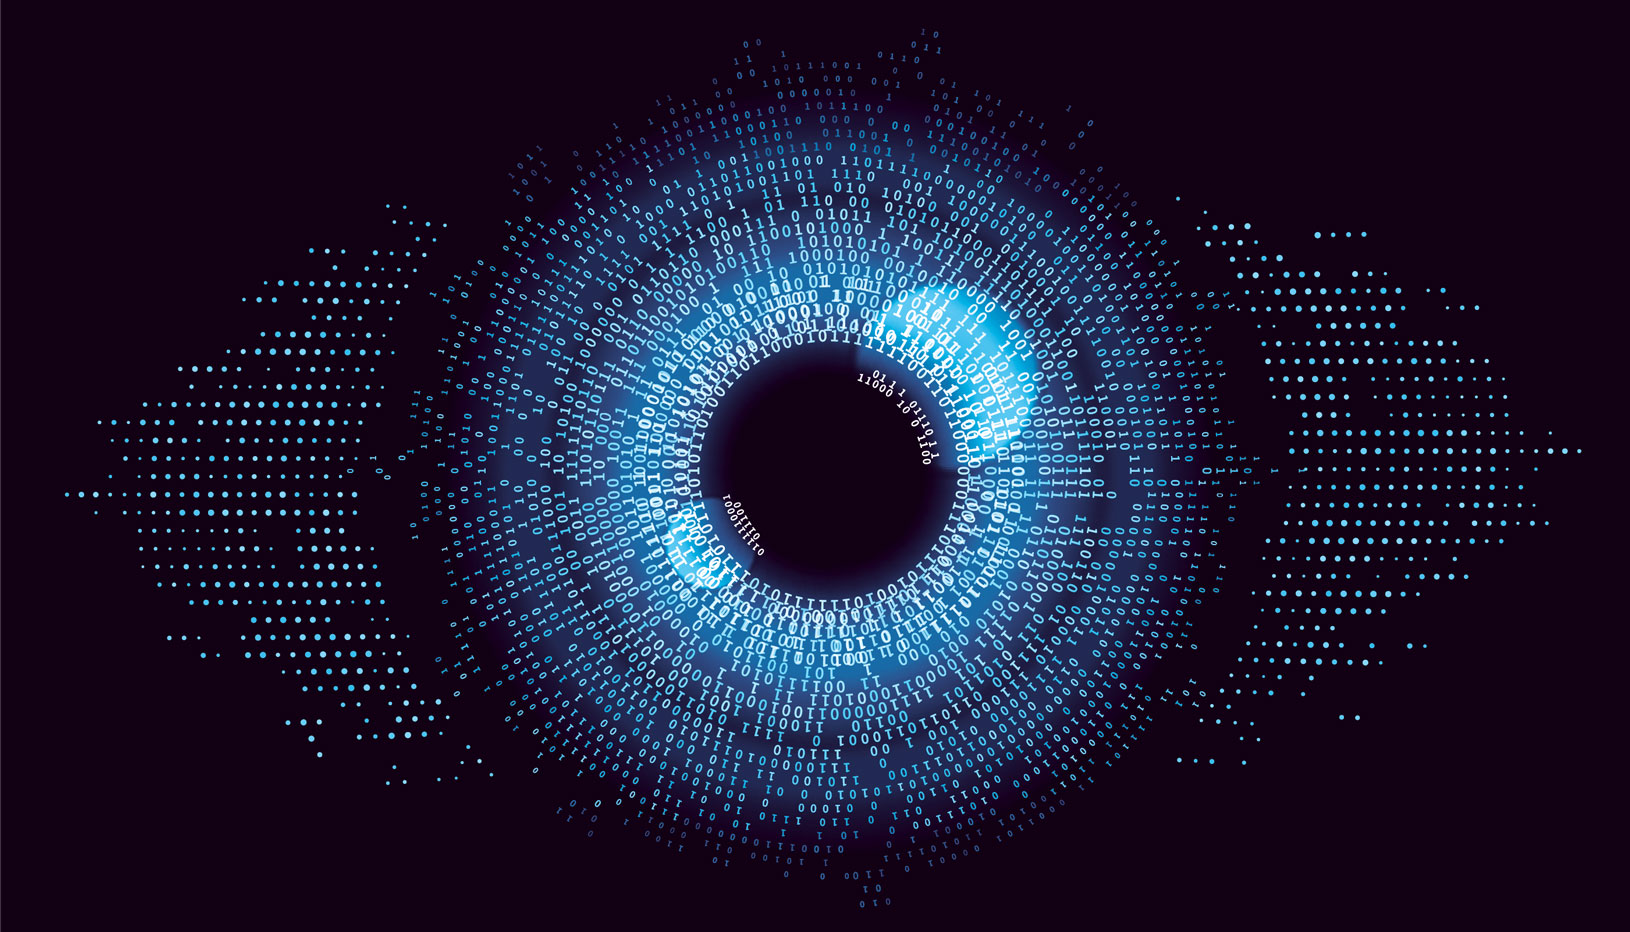 Digital eye with binary code